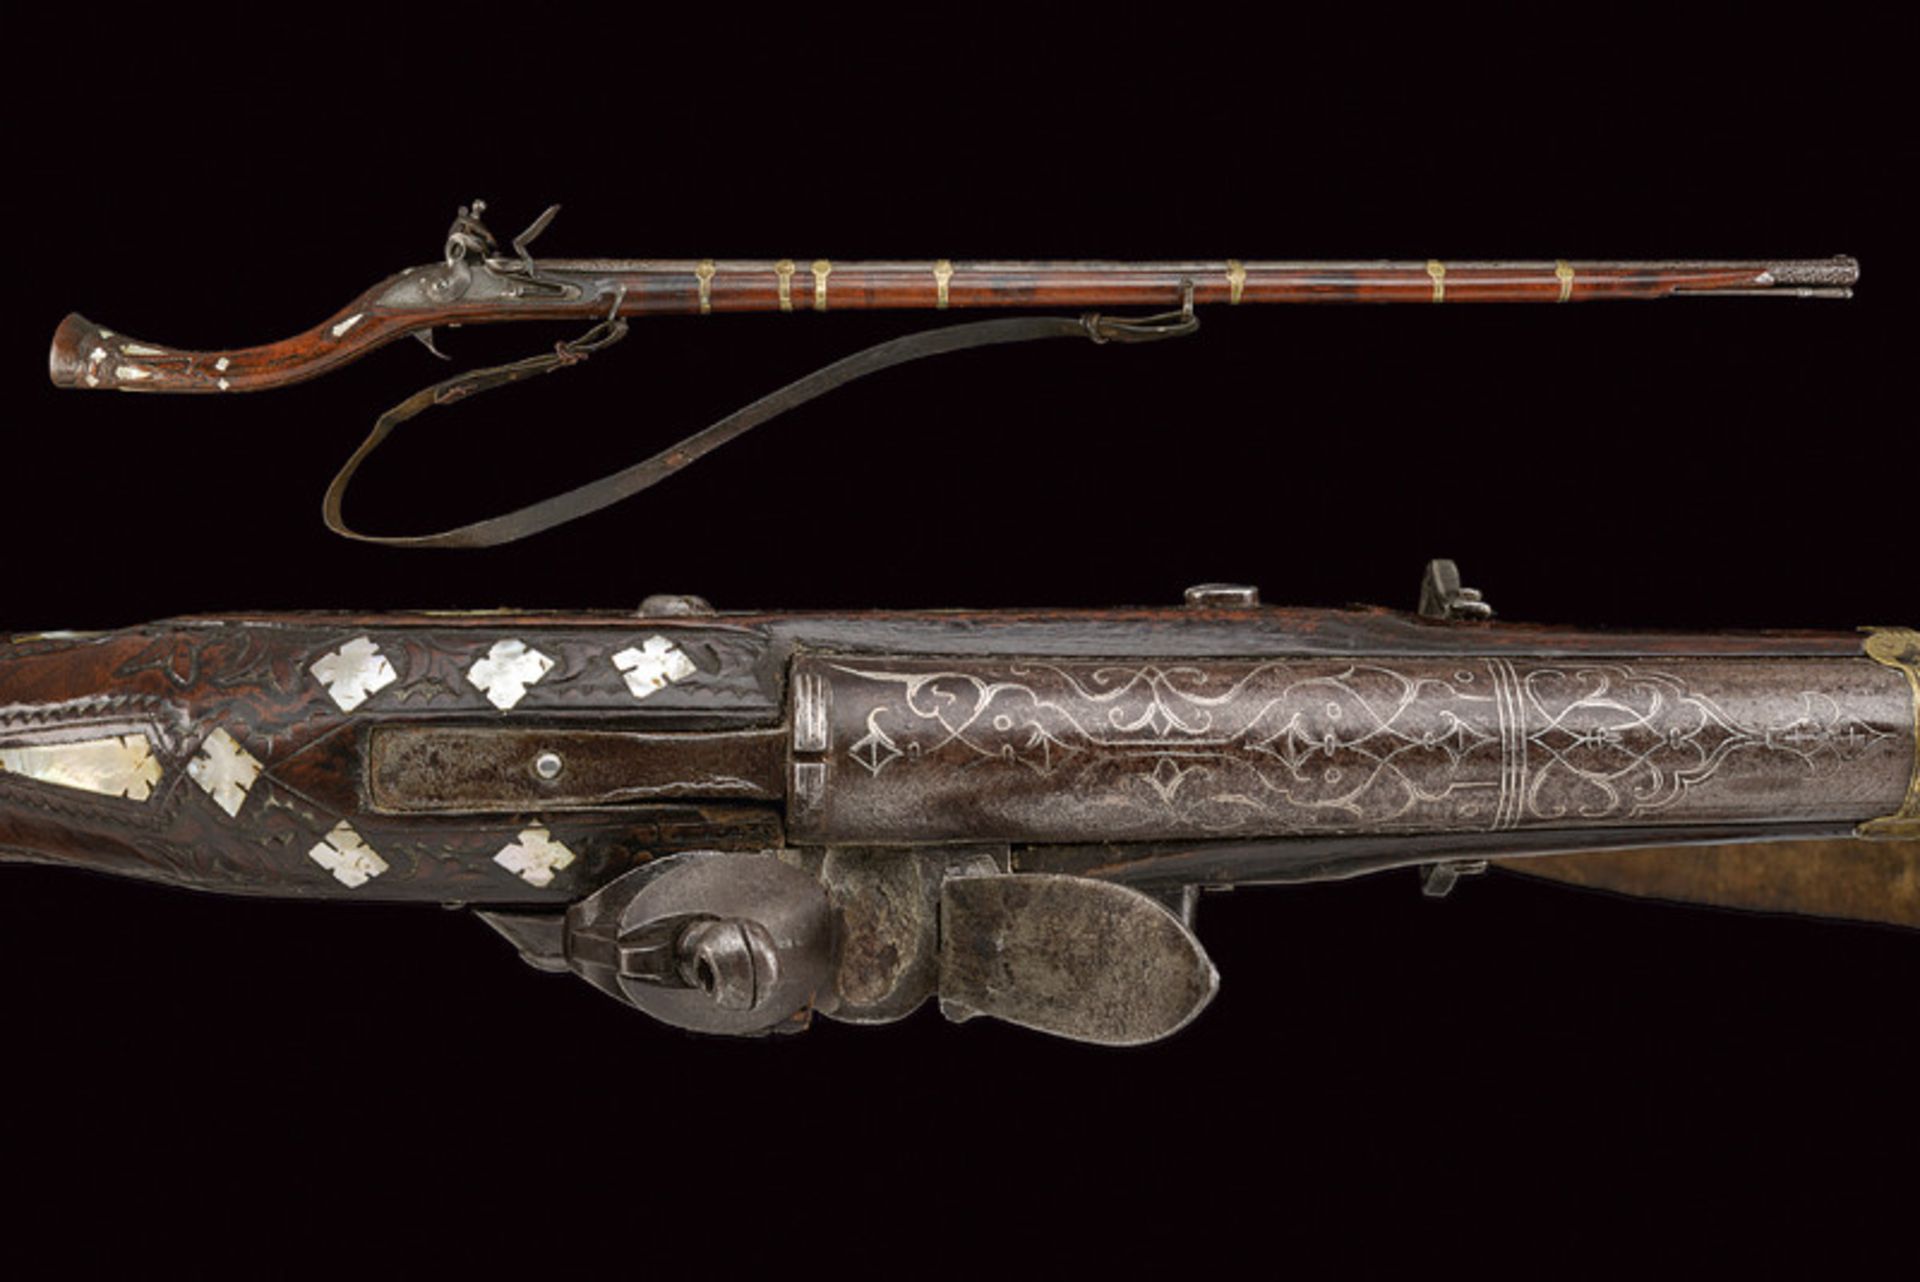 A Jezail flintlock gun with decorated barrel